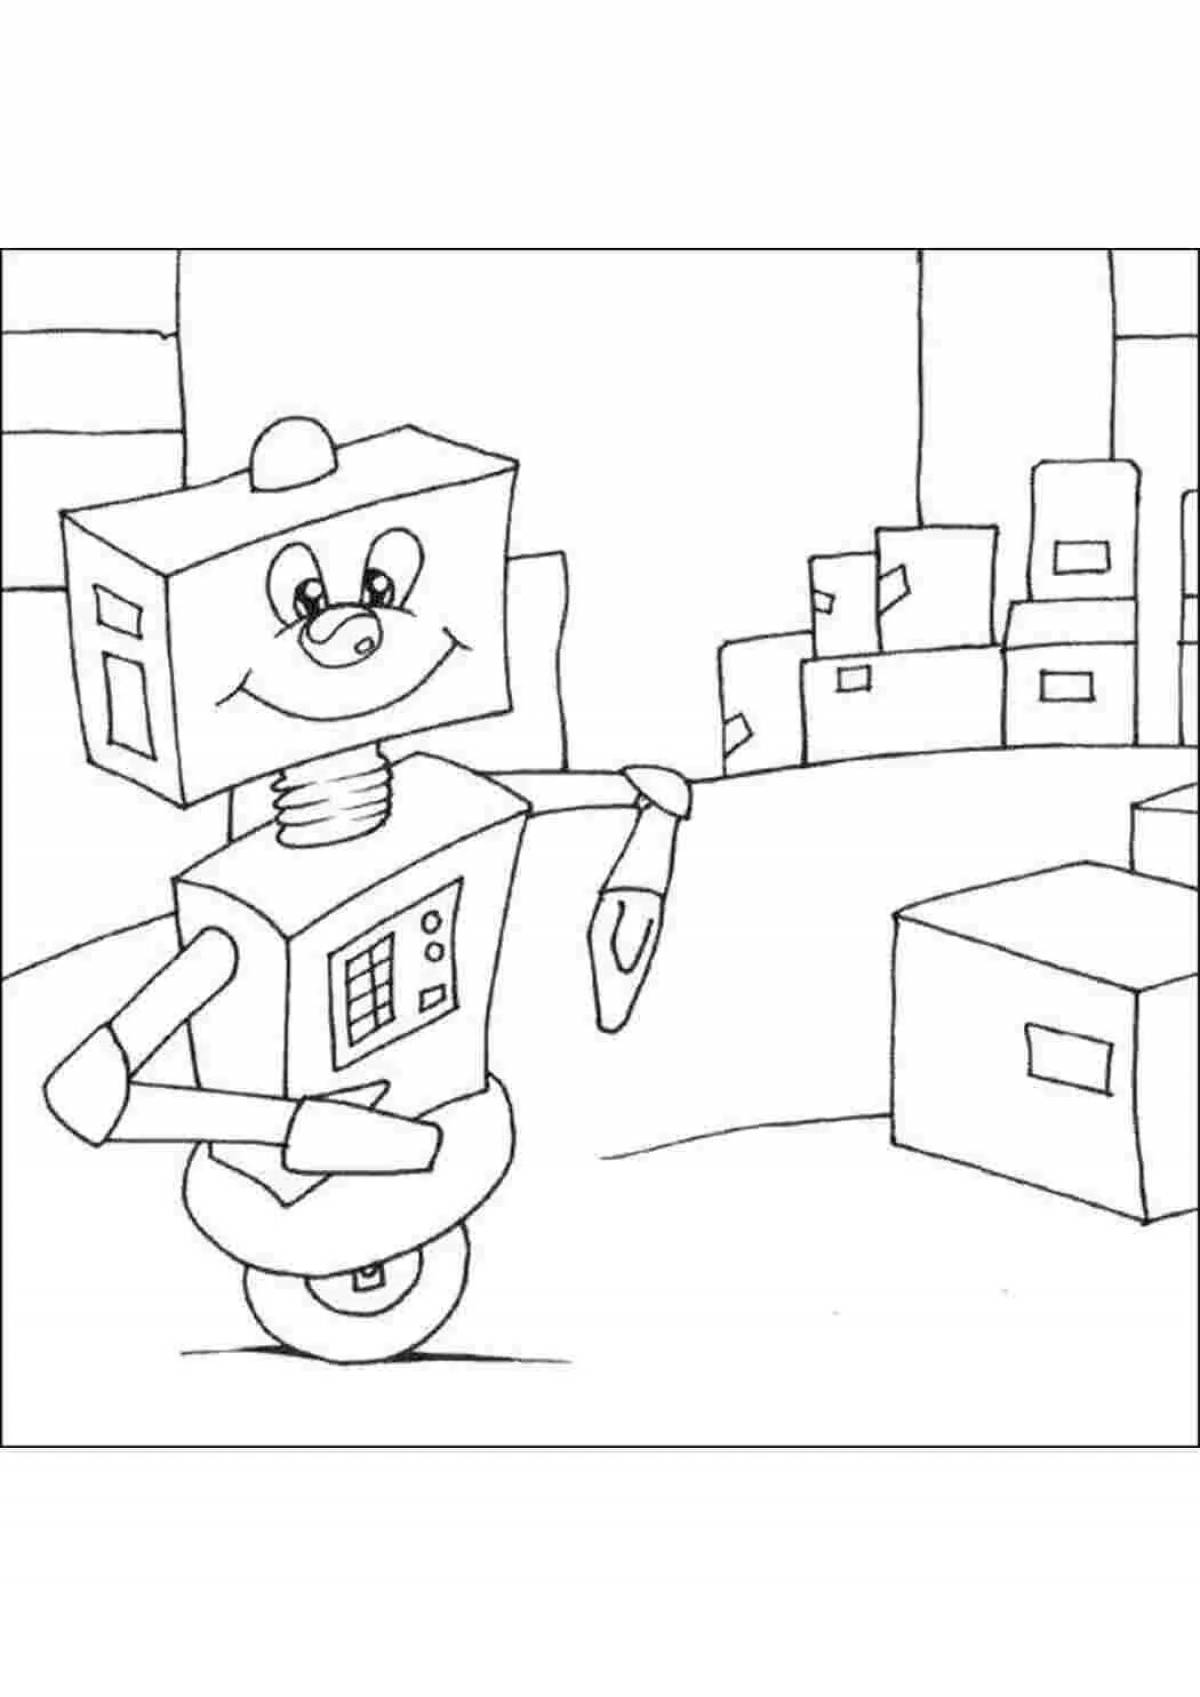 Coloring book motivating robot teacher